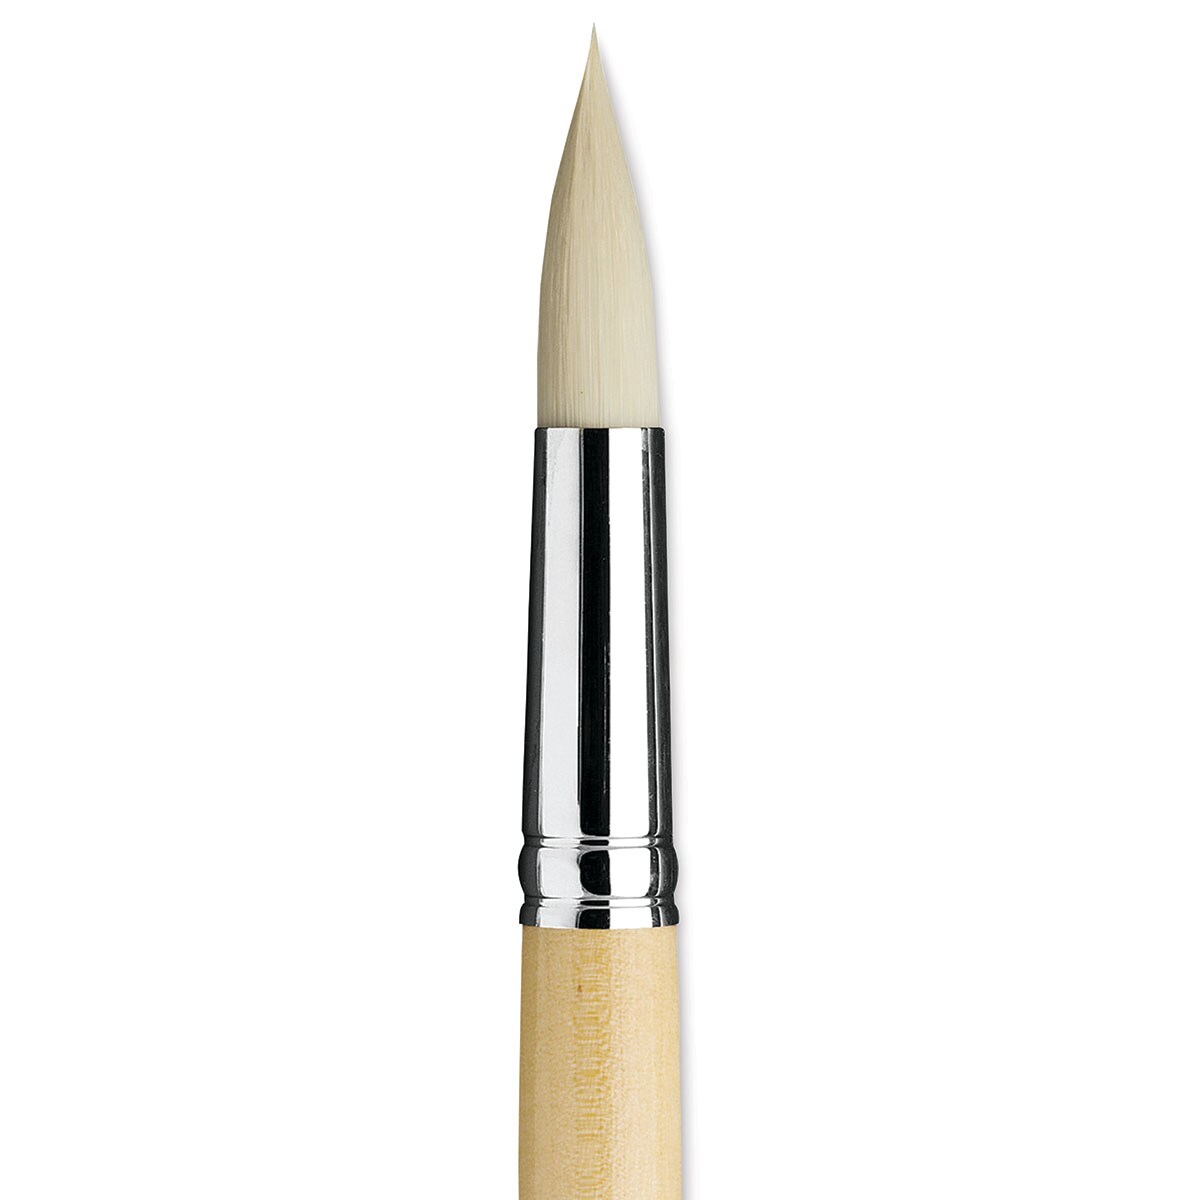 Da Vinci Top Acryl Synthetic Brush - Round, Long Handle, Size 28